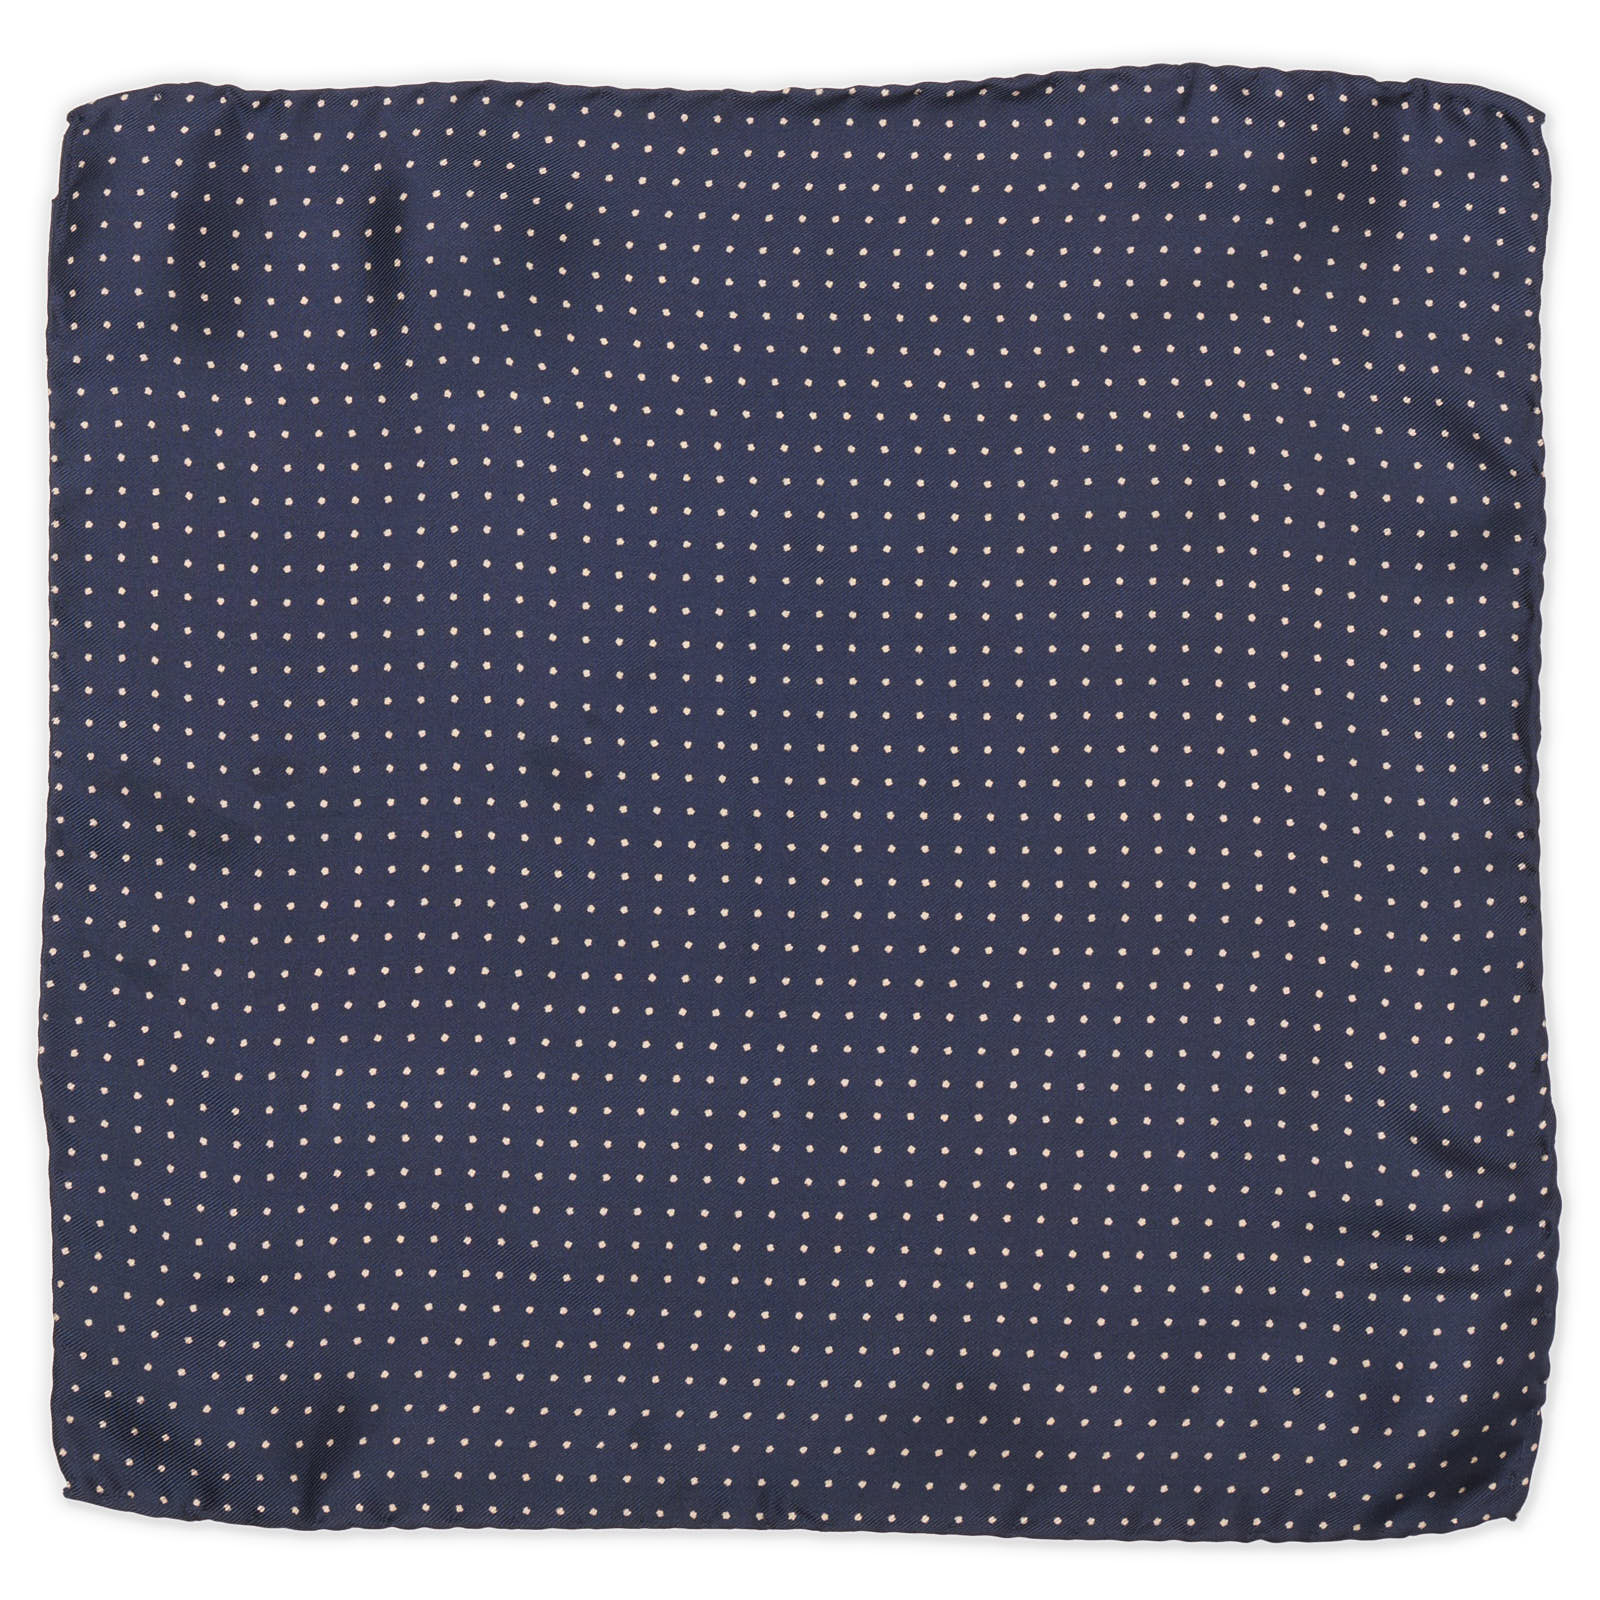 MARTINI RACING Handmade Blue Dot Silk Pocket Square NEW 26cm x 26cm